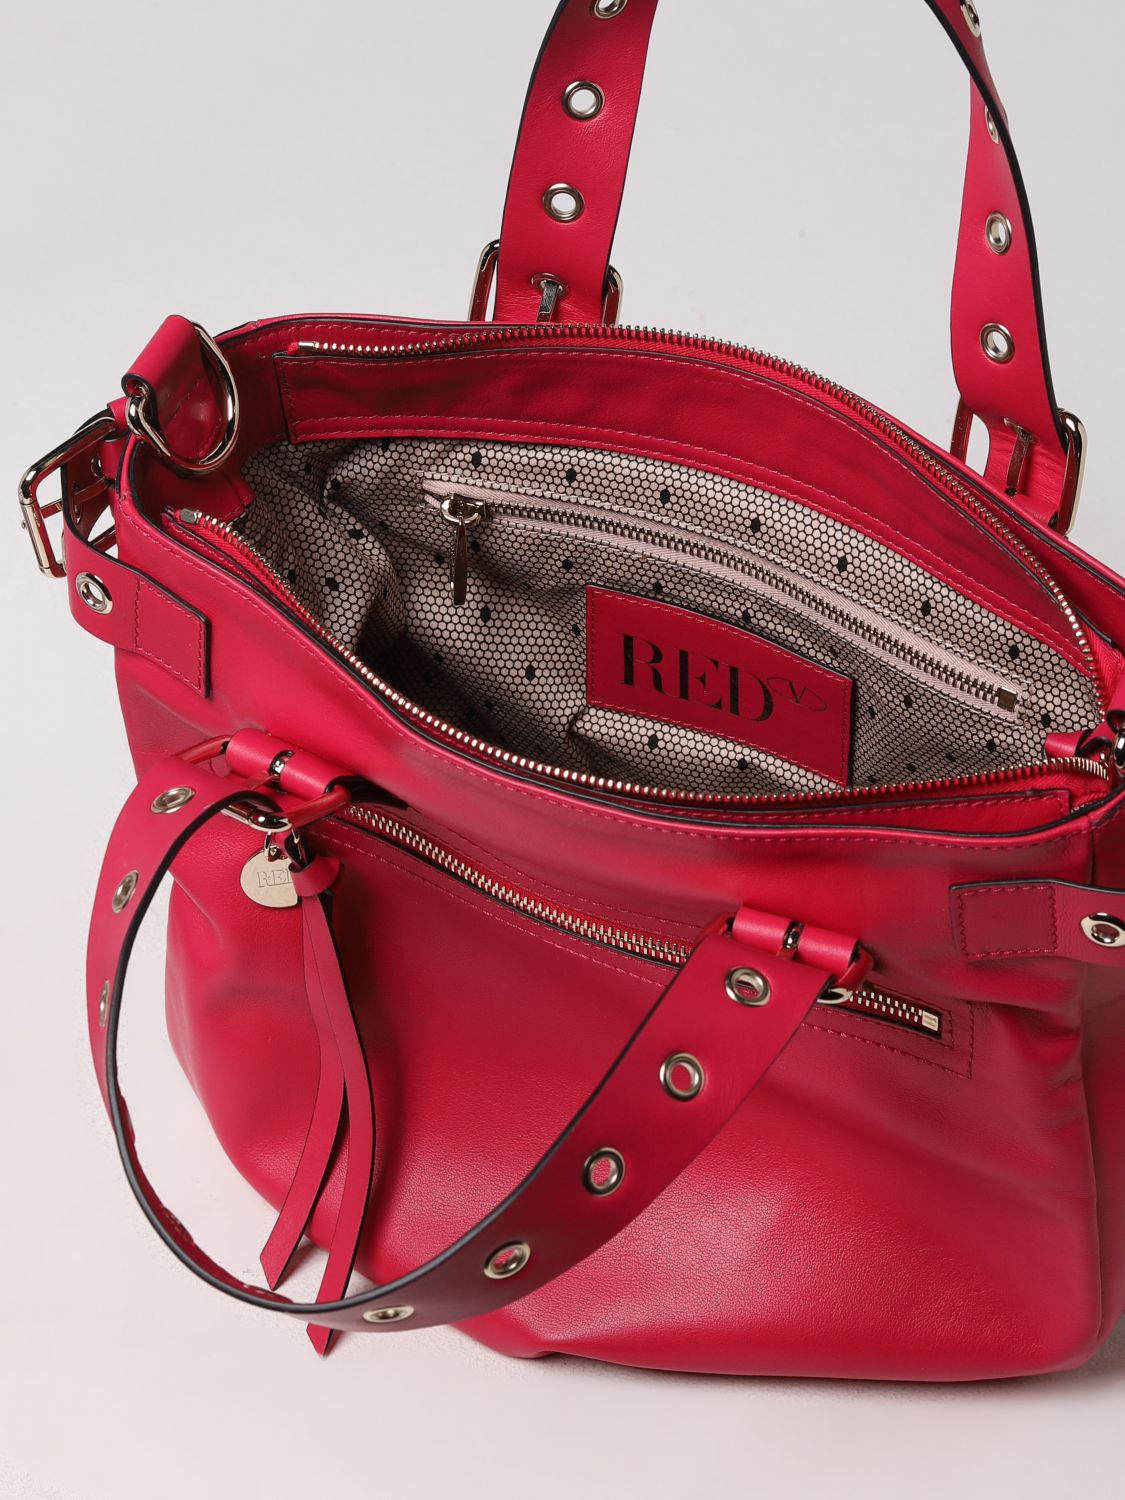 Handbag Red(V): Red(V) handbag for women red 4